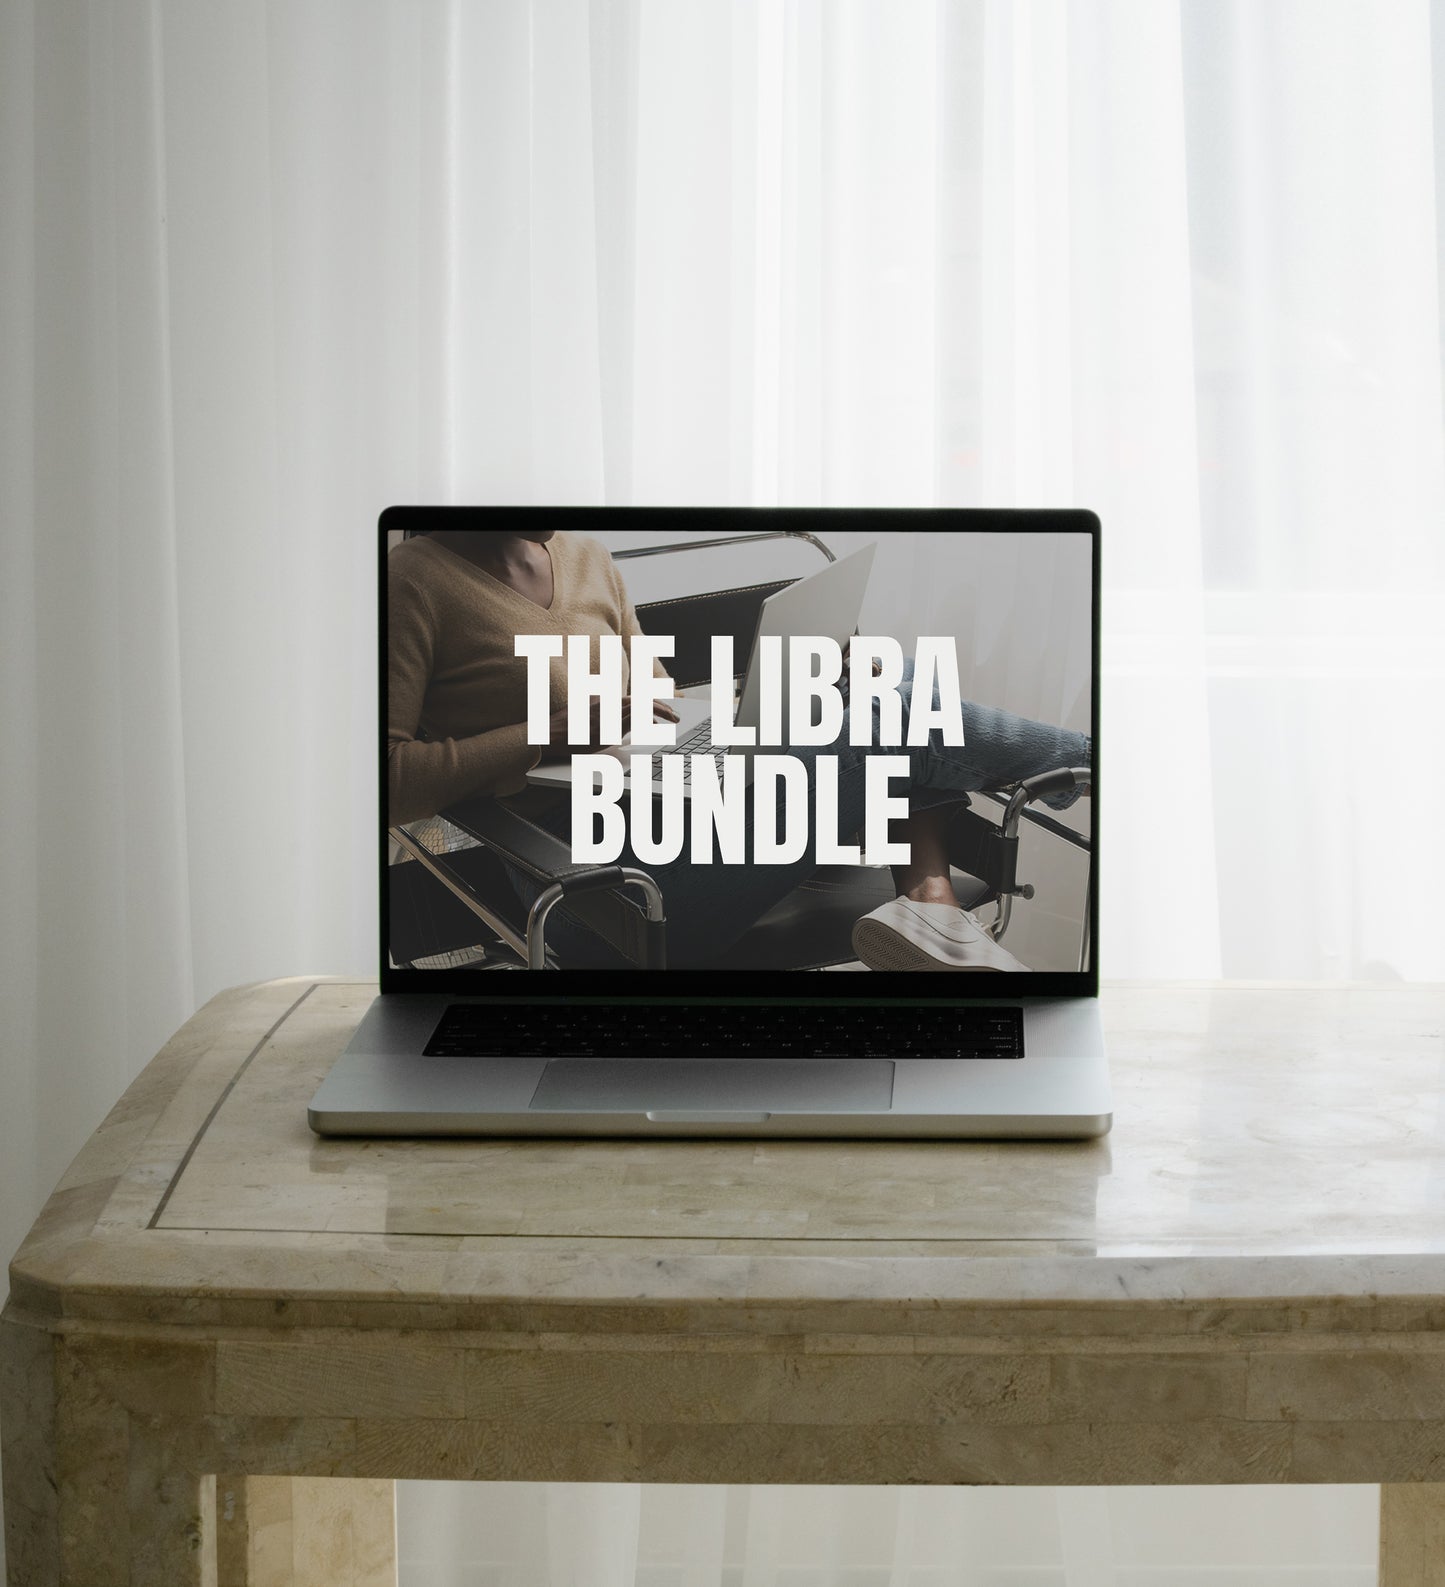 The Libra Collection Bundle